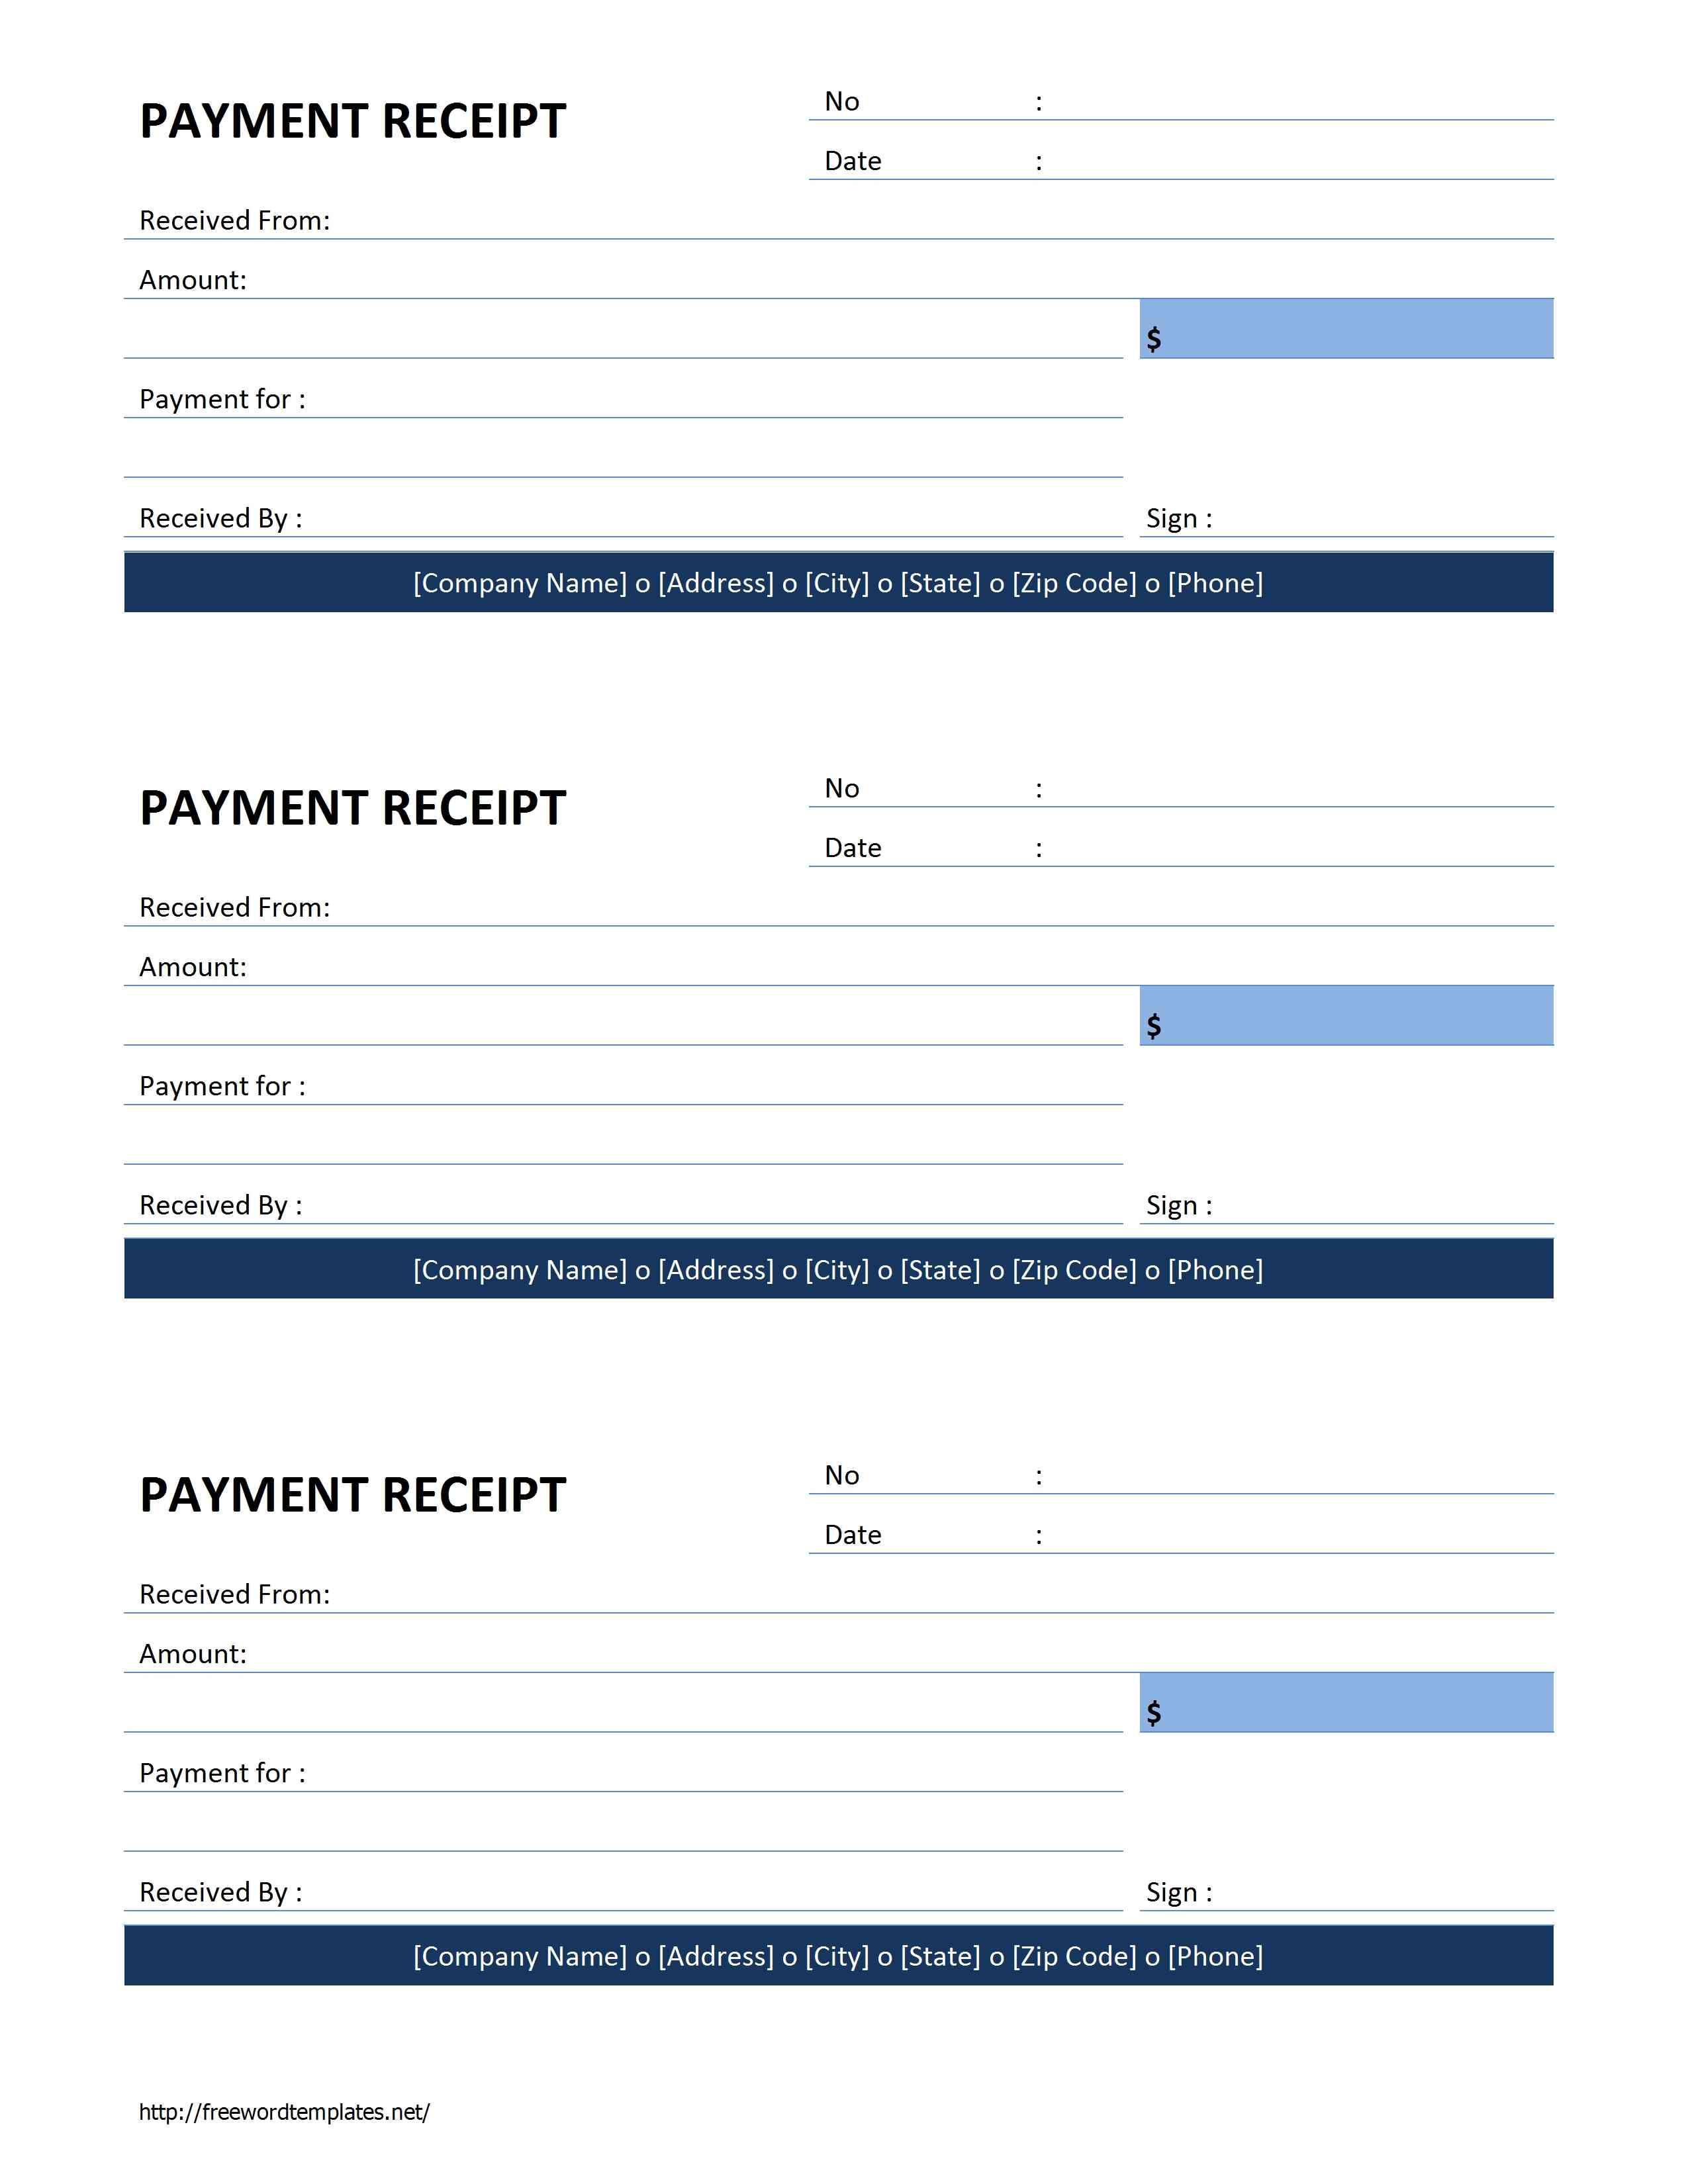 Payment Receipt Sample Template